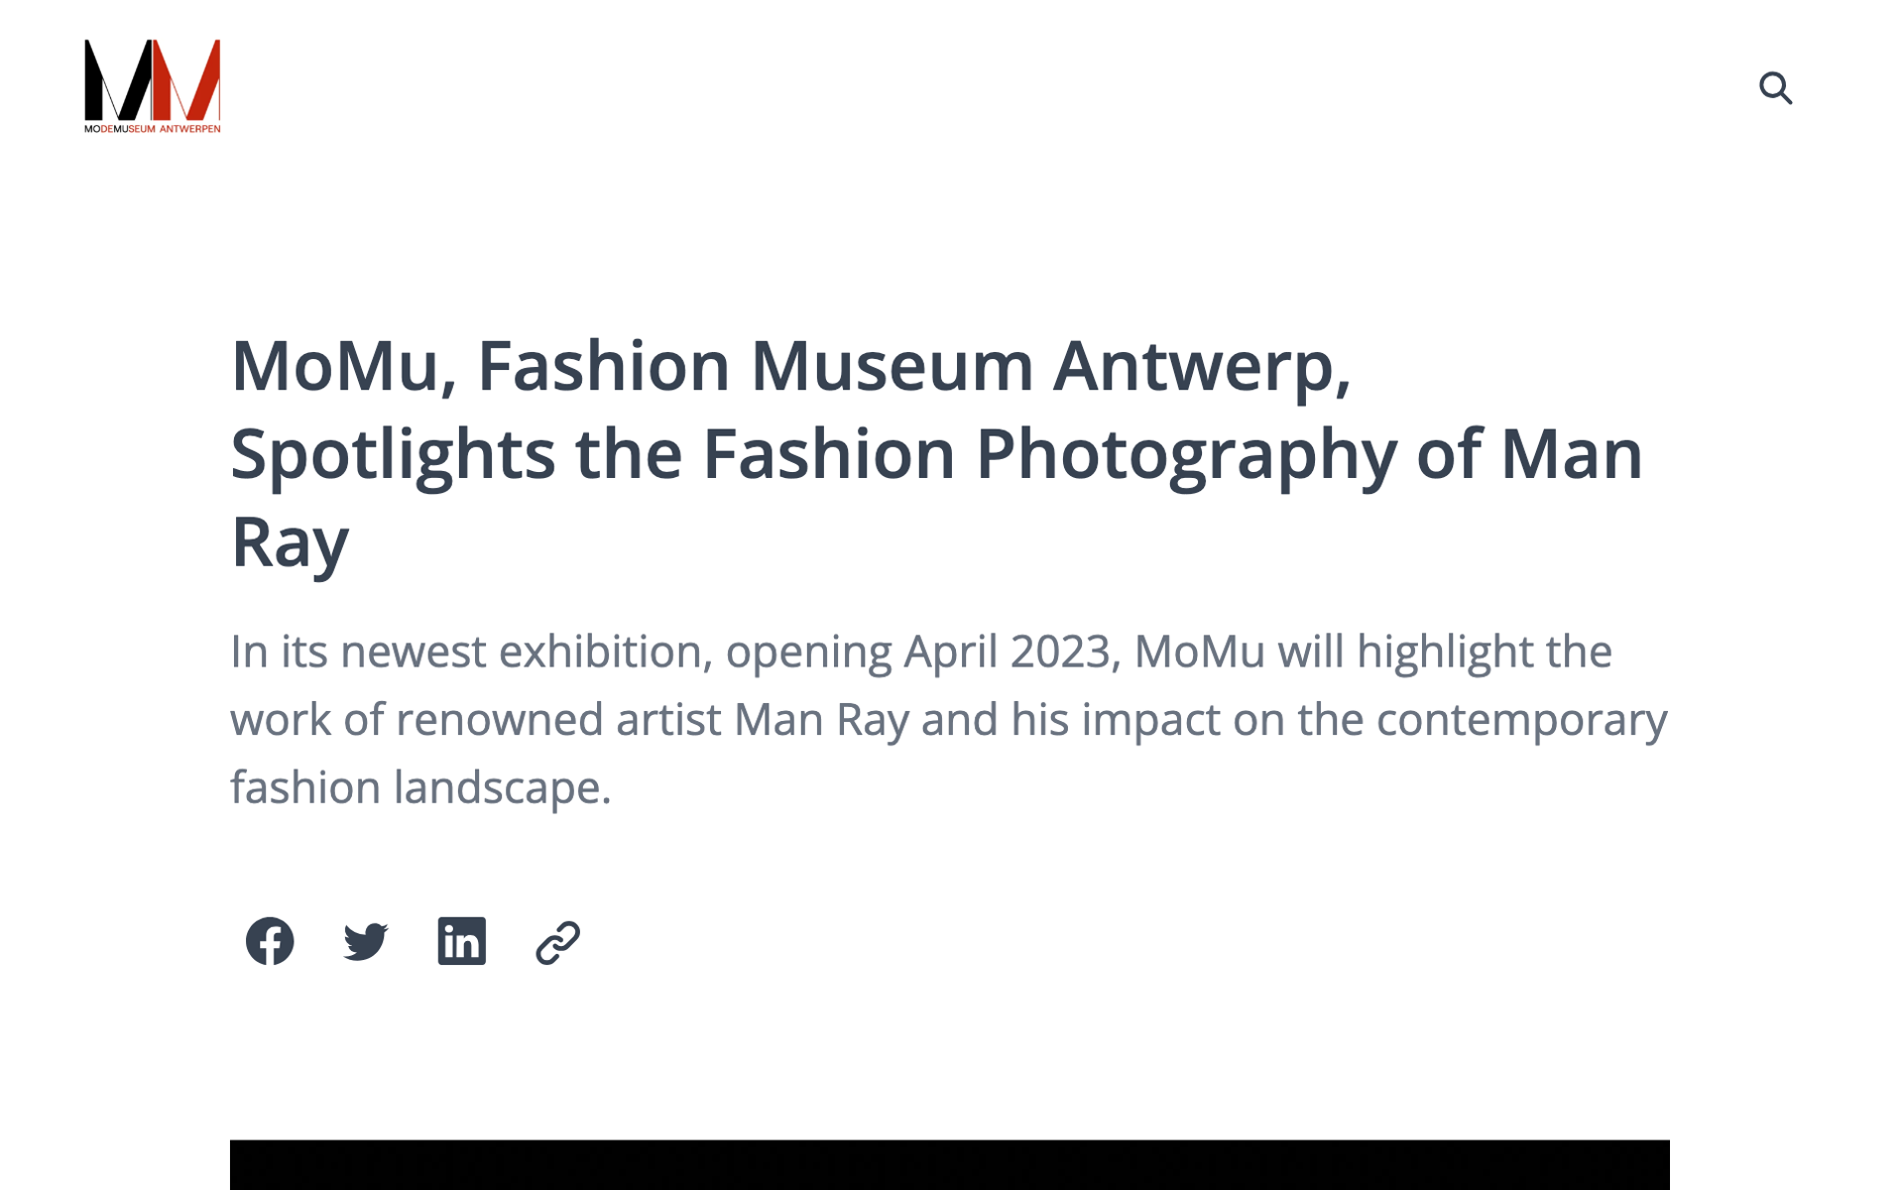 MoMu, Fashion Museum Antwerp, Spotlights the Fashion Photography of Man Ray